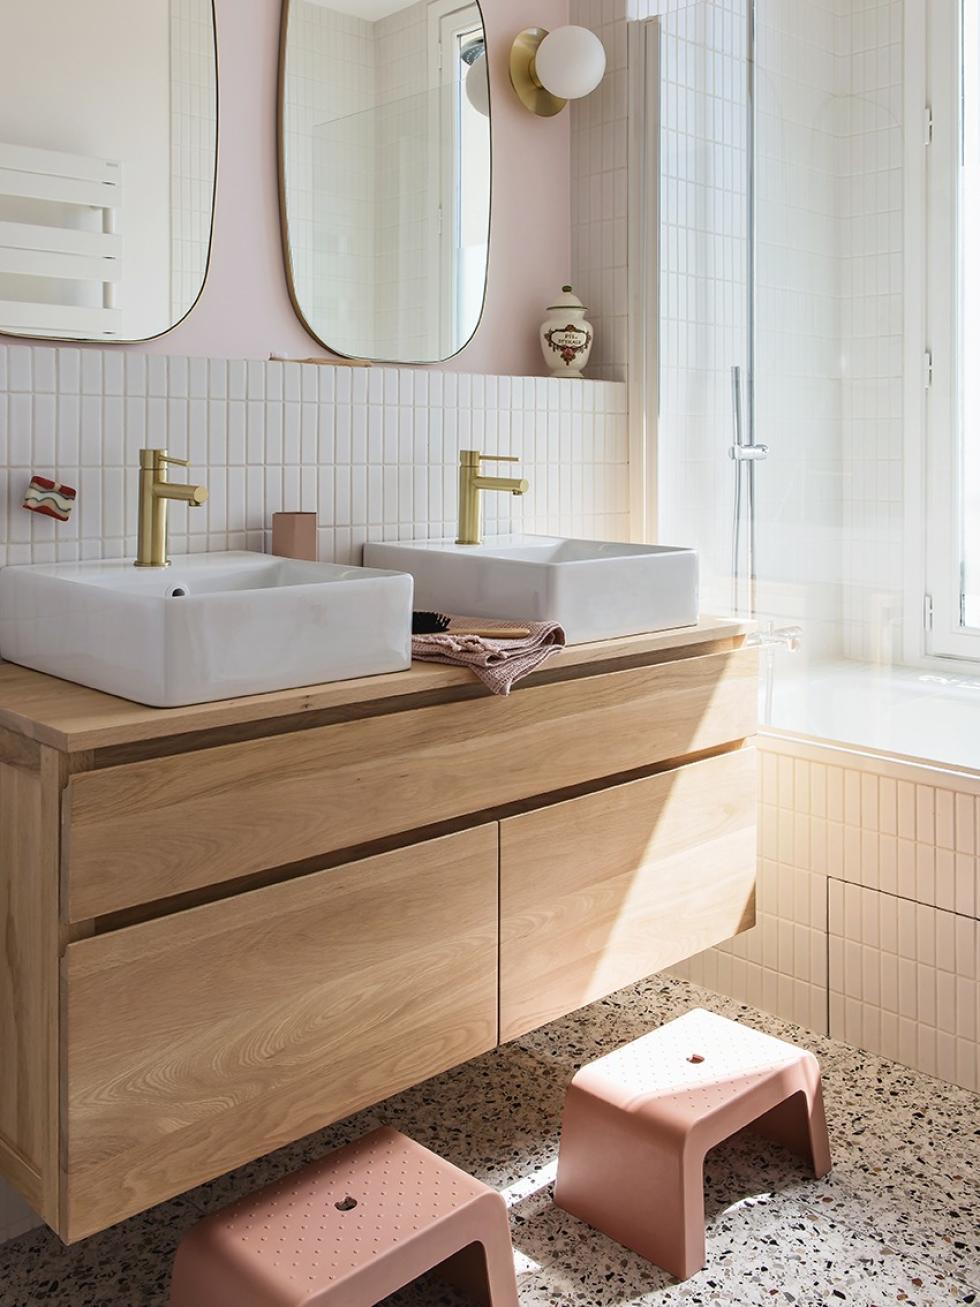 The bathroom of Lucie Socrate ⓒ Hervé Goluza for Plum